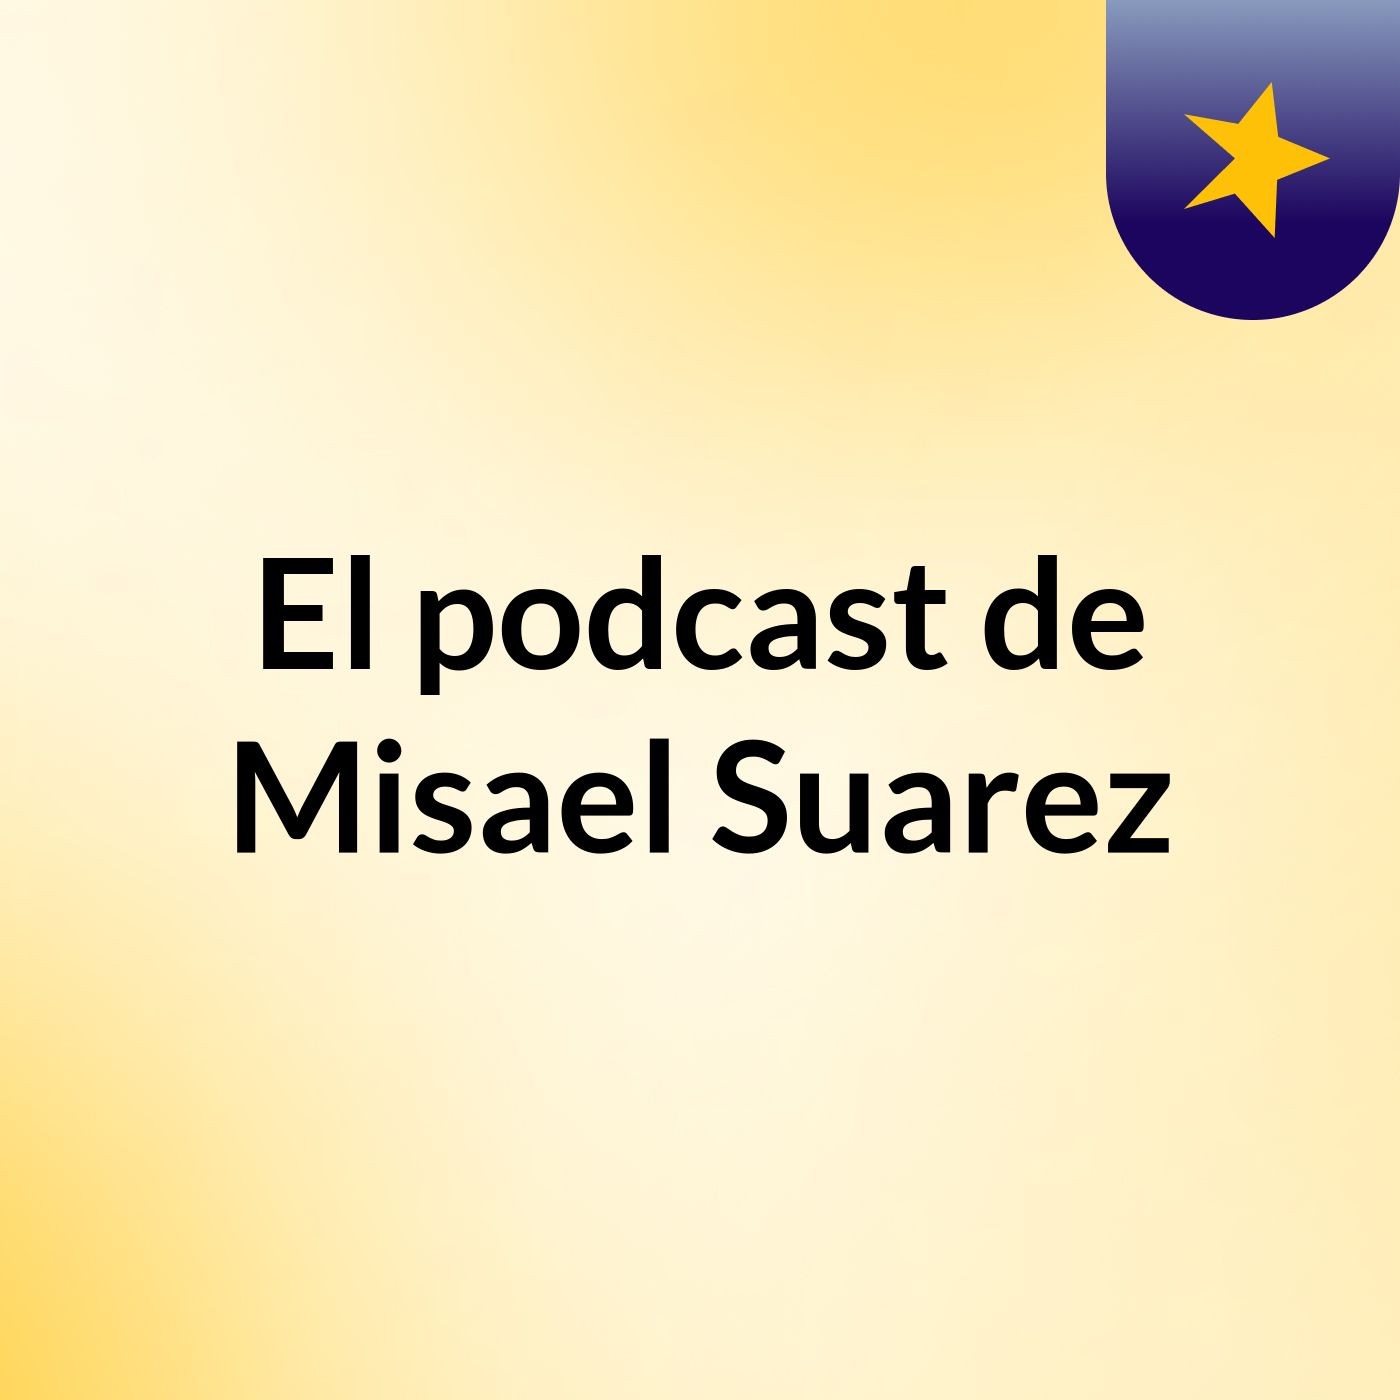 Episodio 3 - El podcast de Misael Suarez